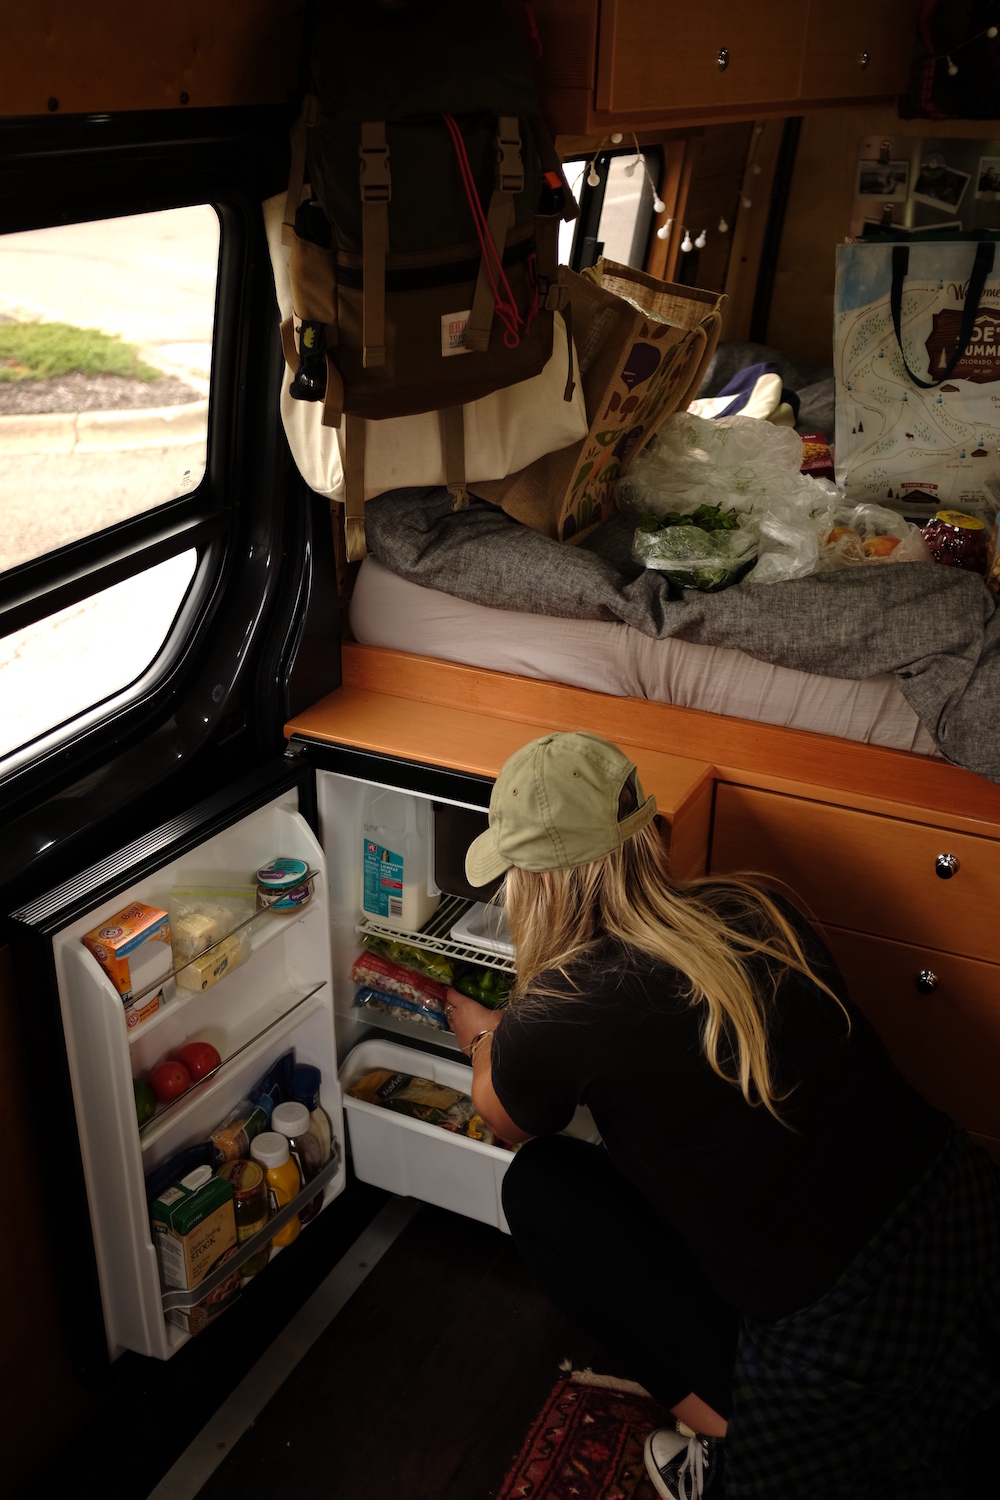 putting groceries away - living in a van